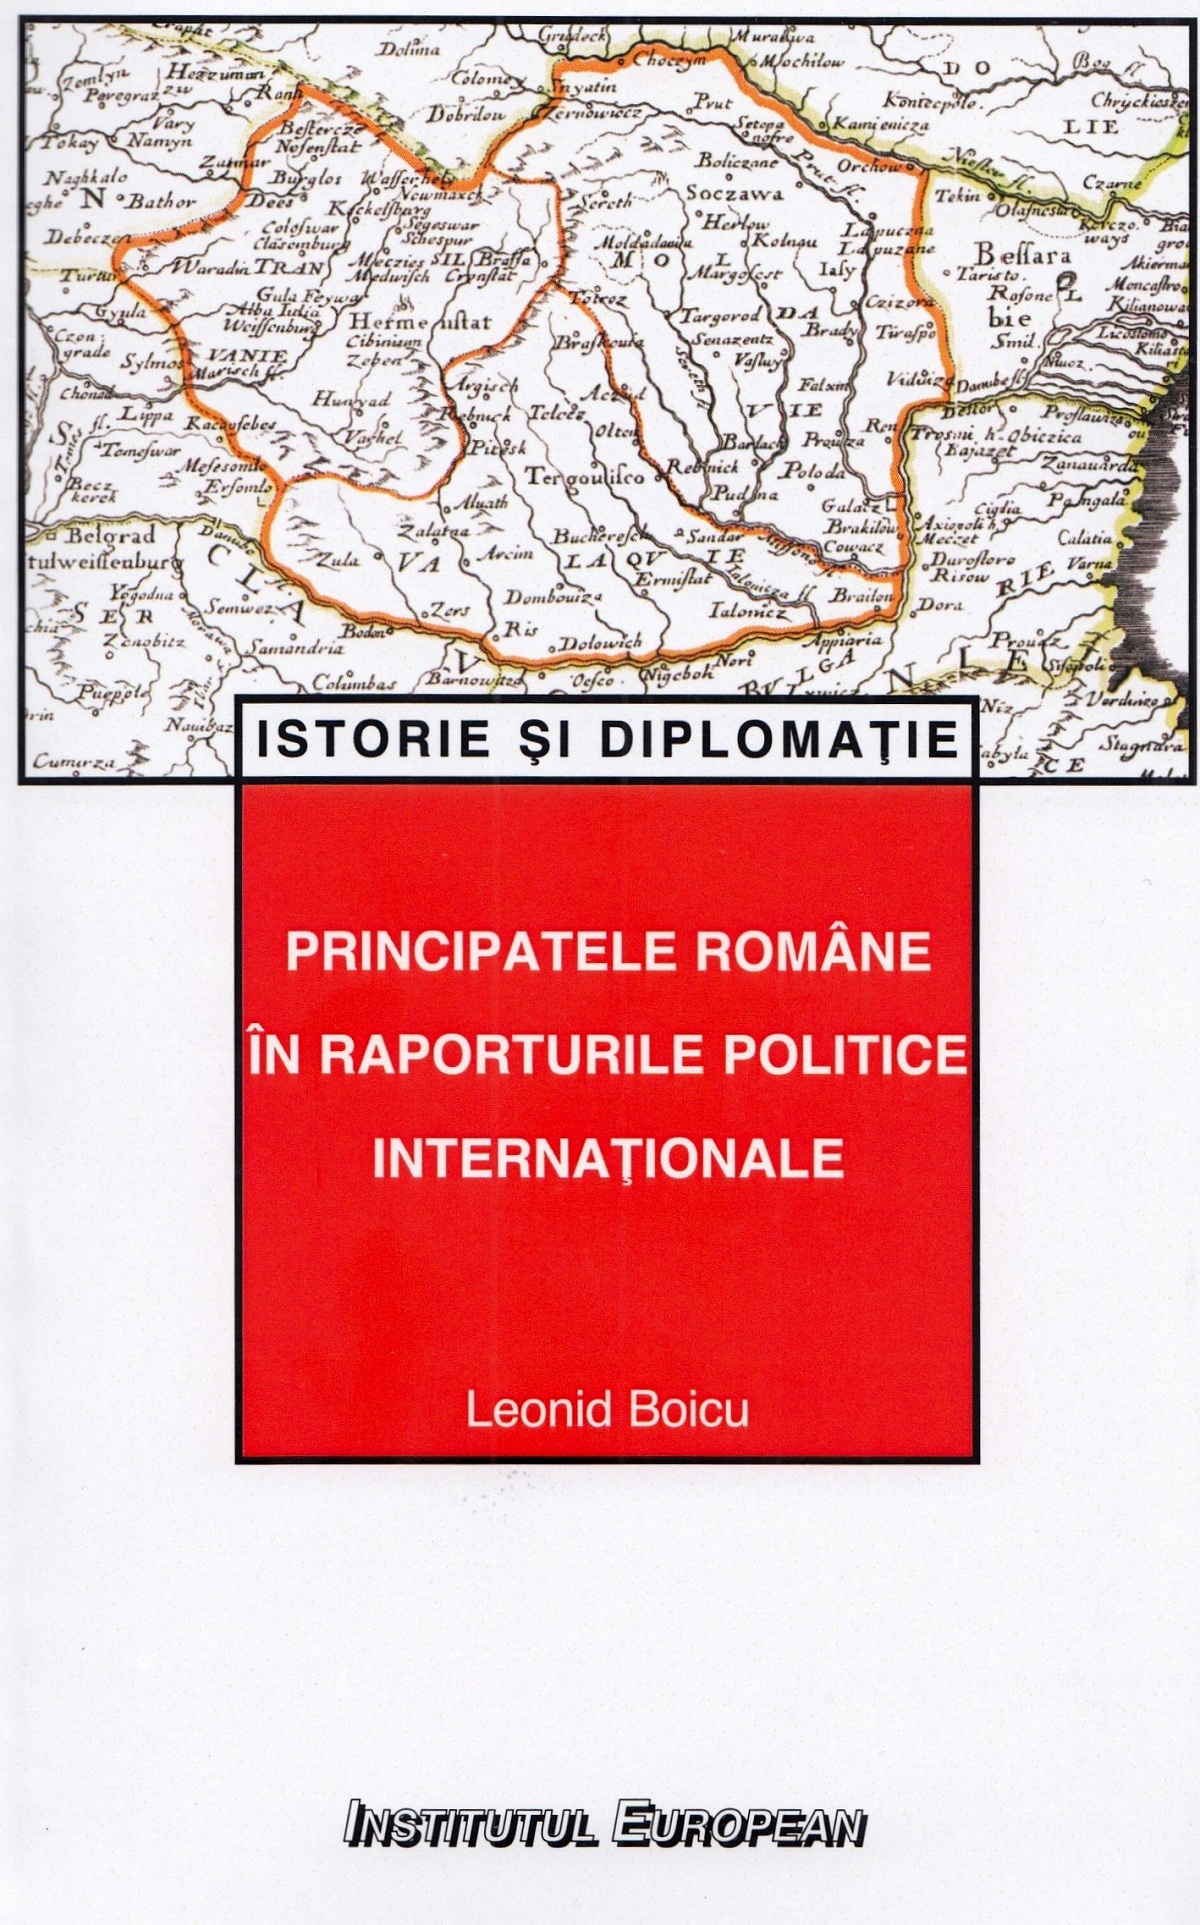 Principatele romane in raporturile politice internationale - Leonid Boicu